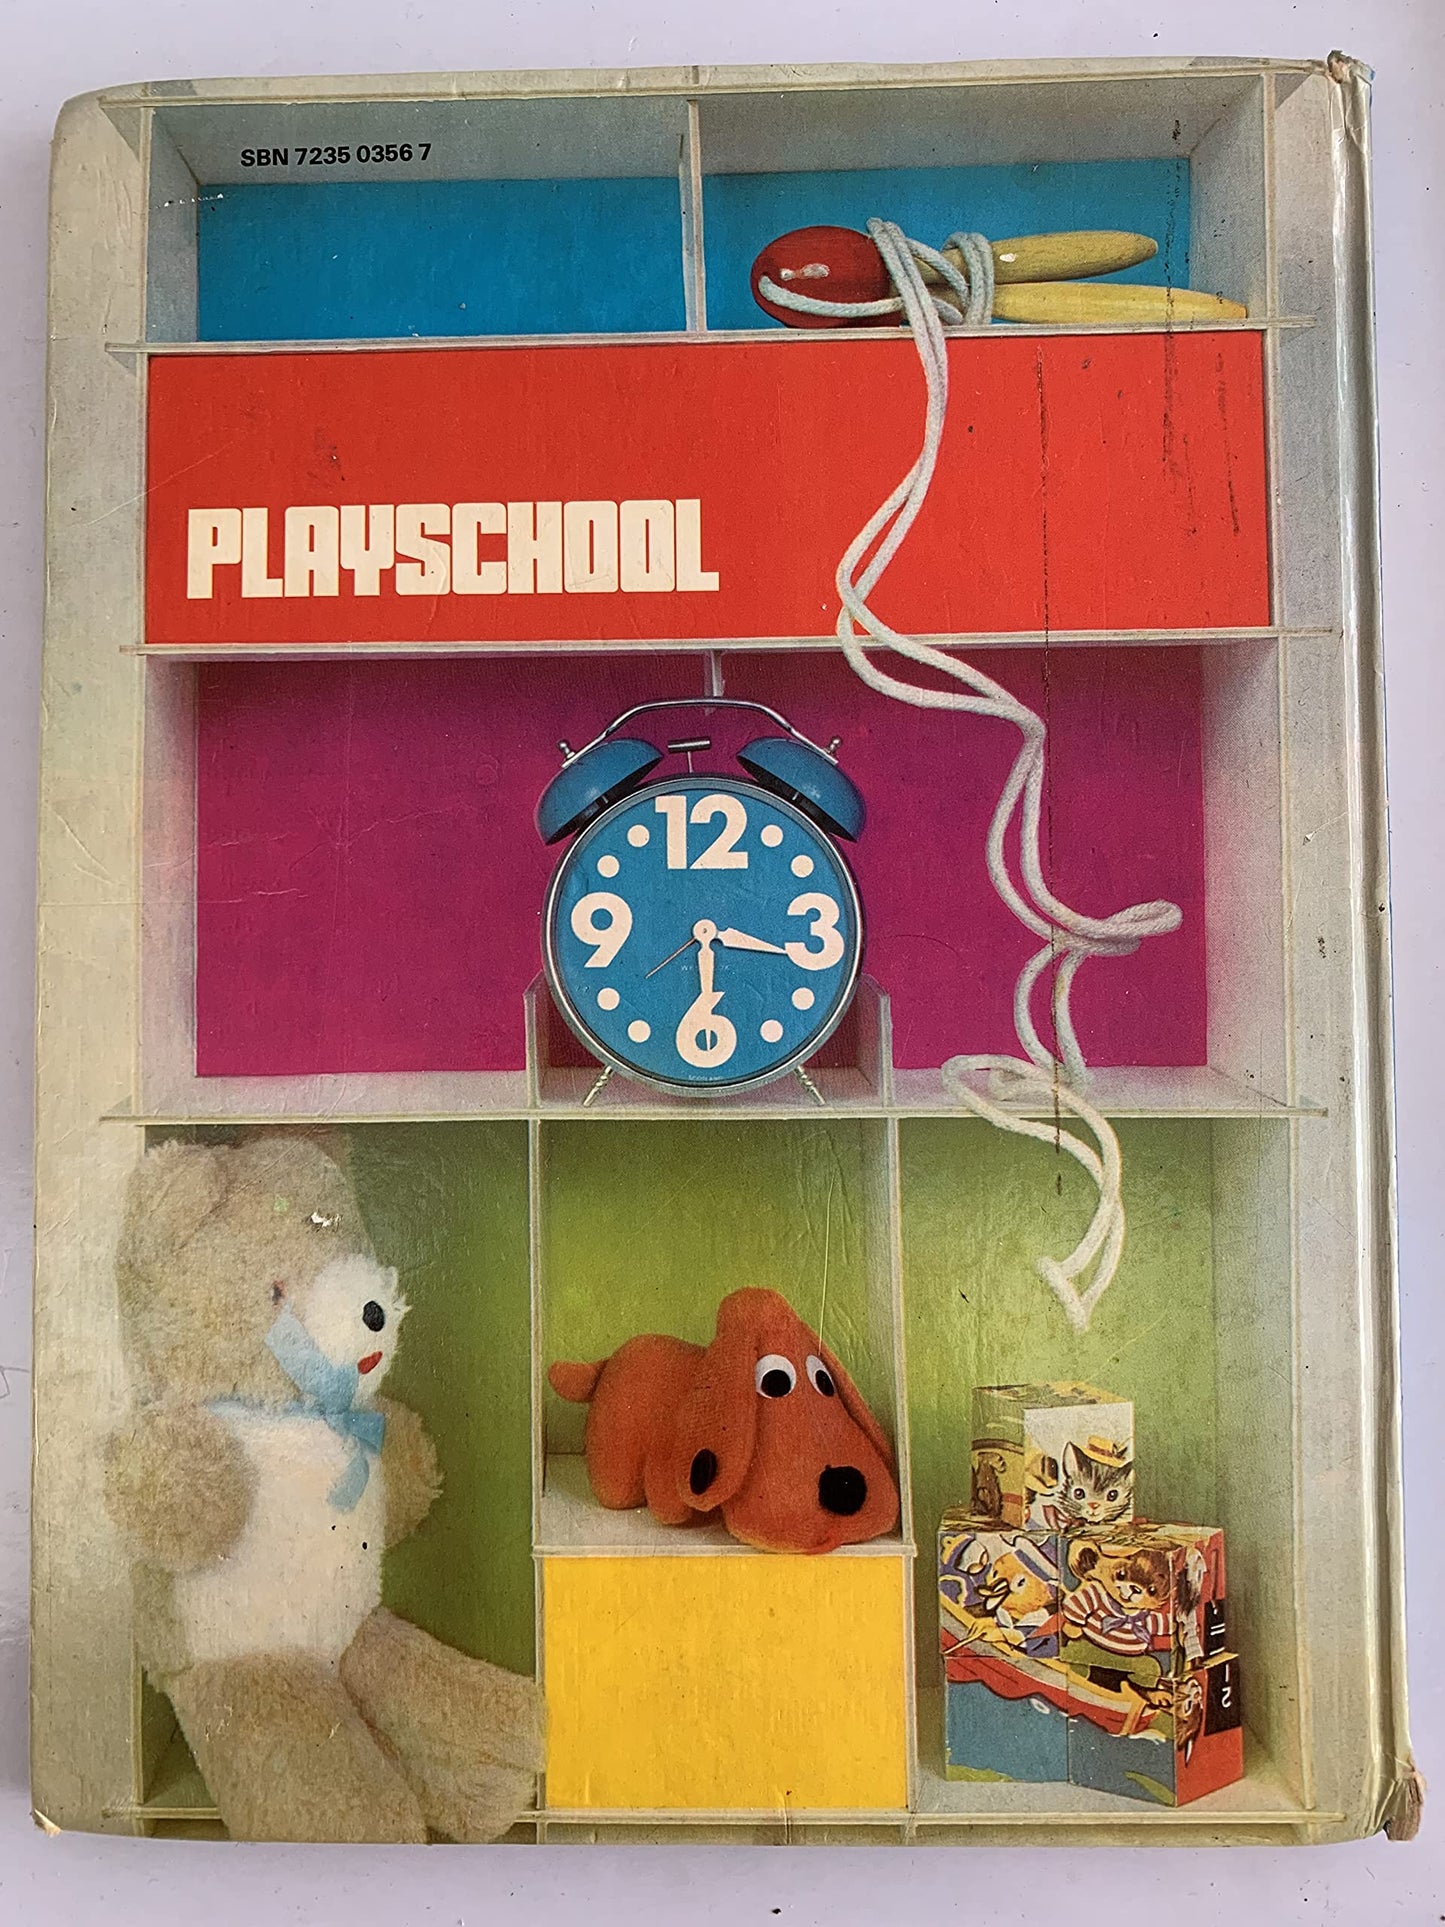 Vintage Playschool Annual 1977